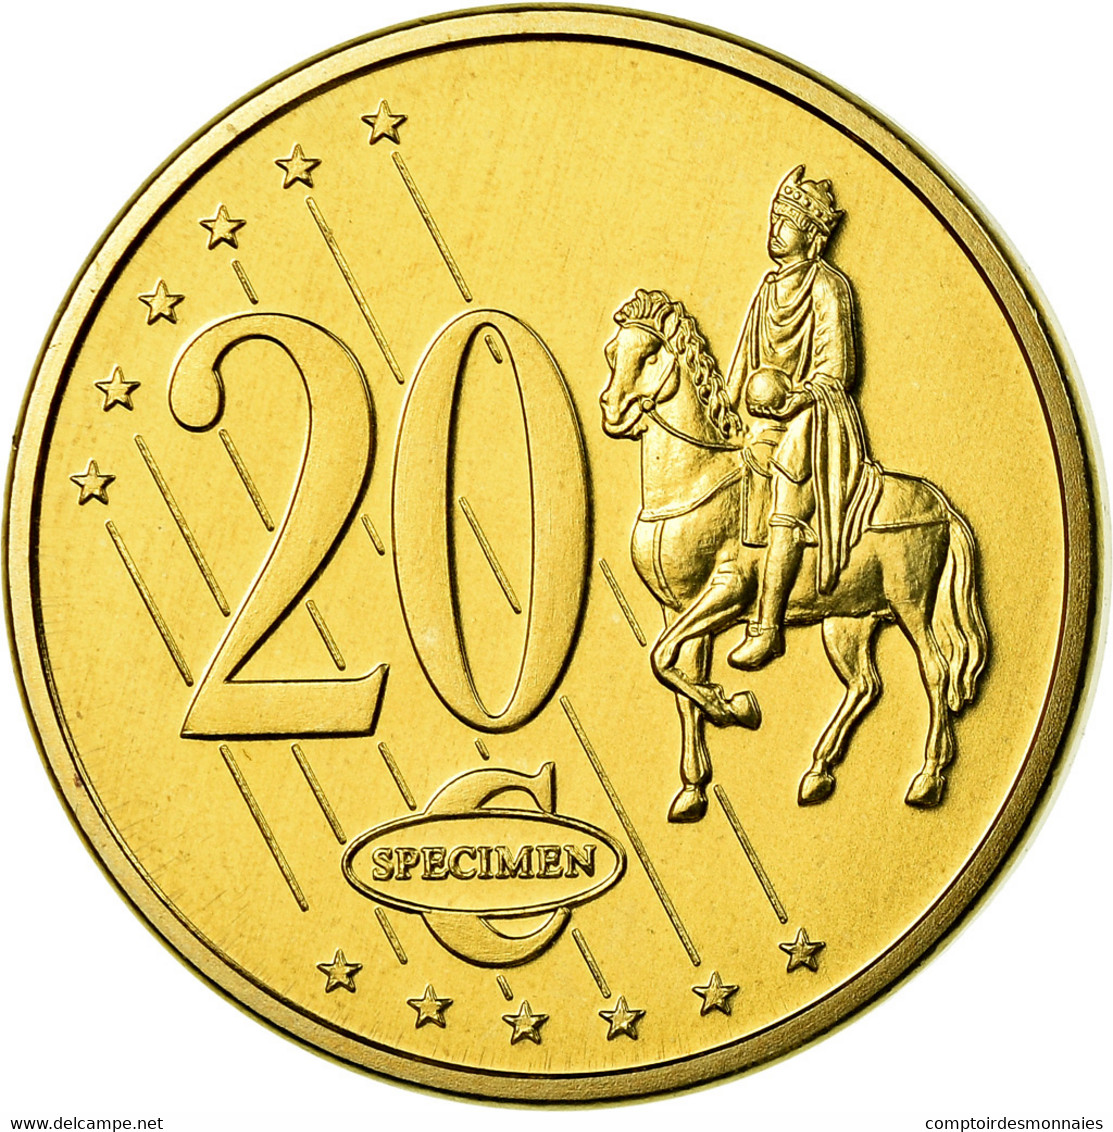 Estonia, 20 Euro Cent, 2003, Unofficial Private Coin, FDC, Laiton - Privéproeven